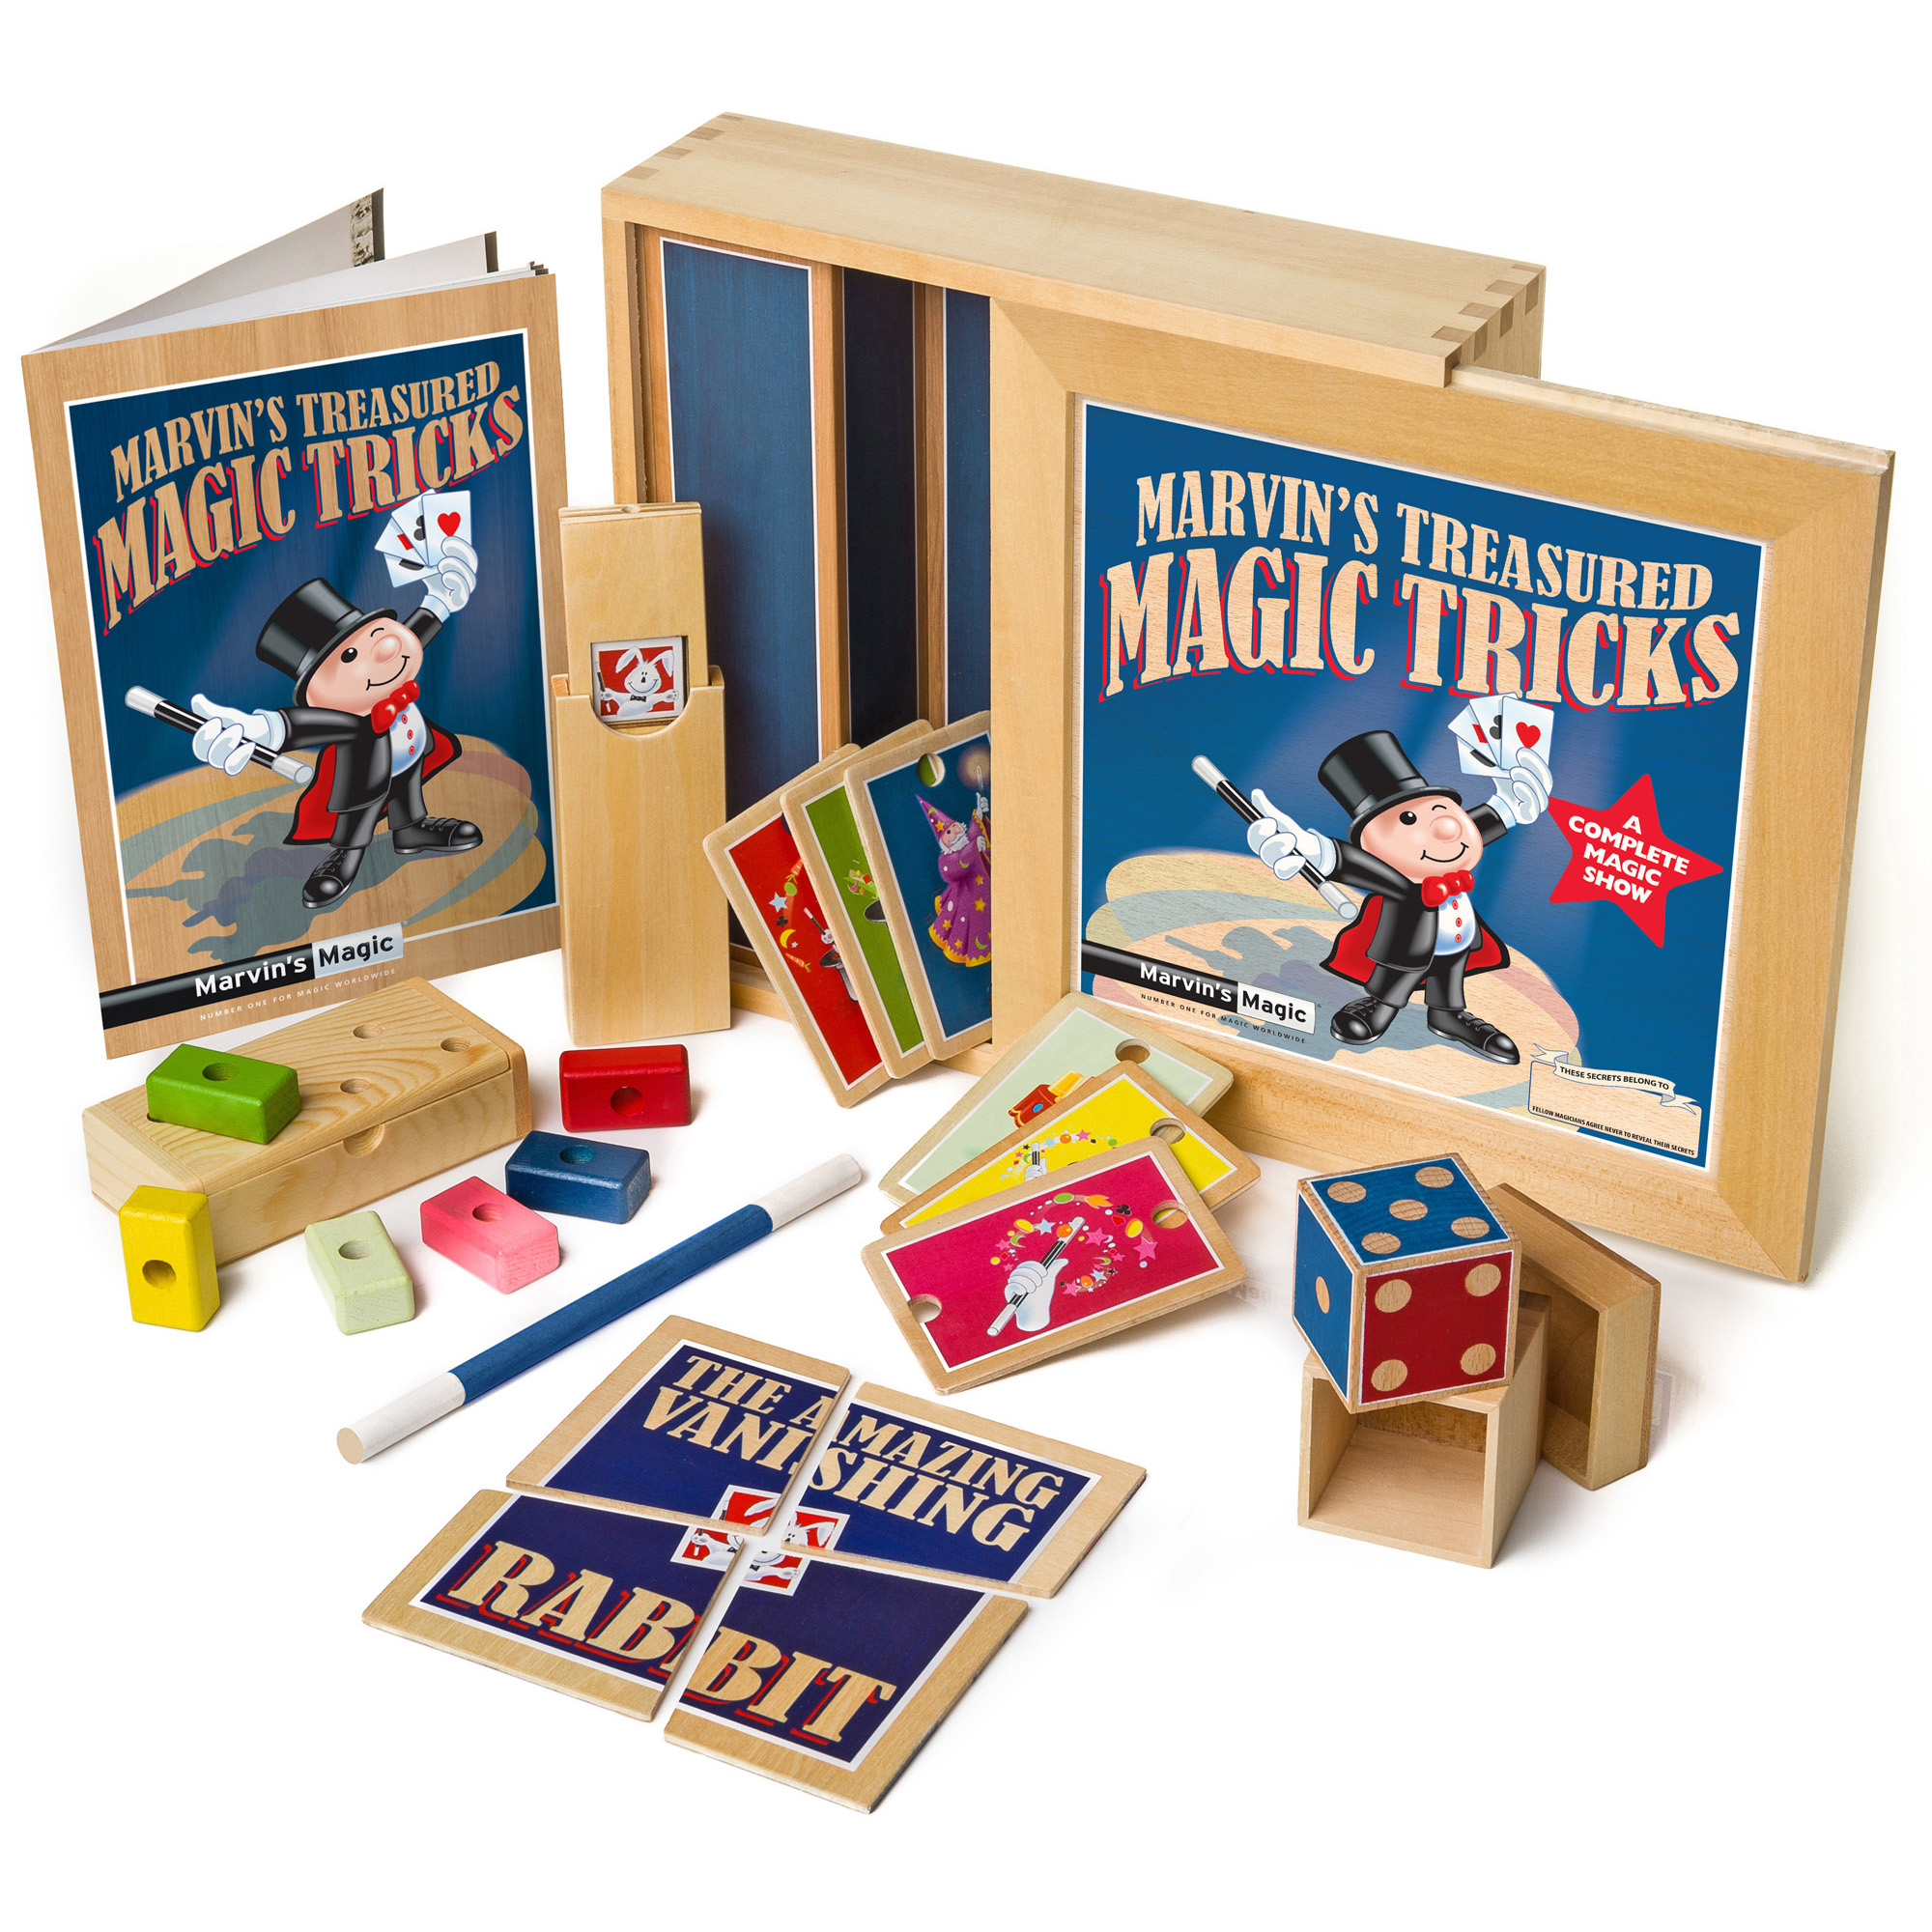 Marvin's treasured magic tricks  - Marvin's Magic